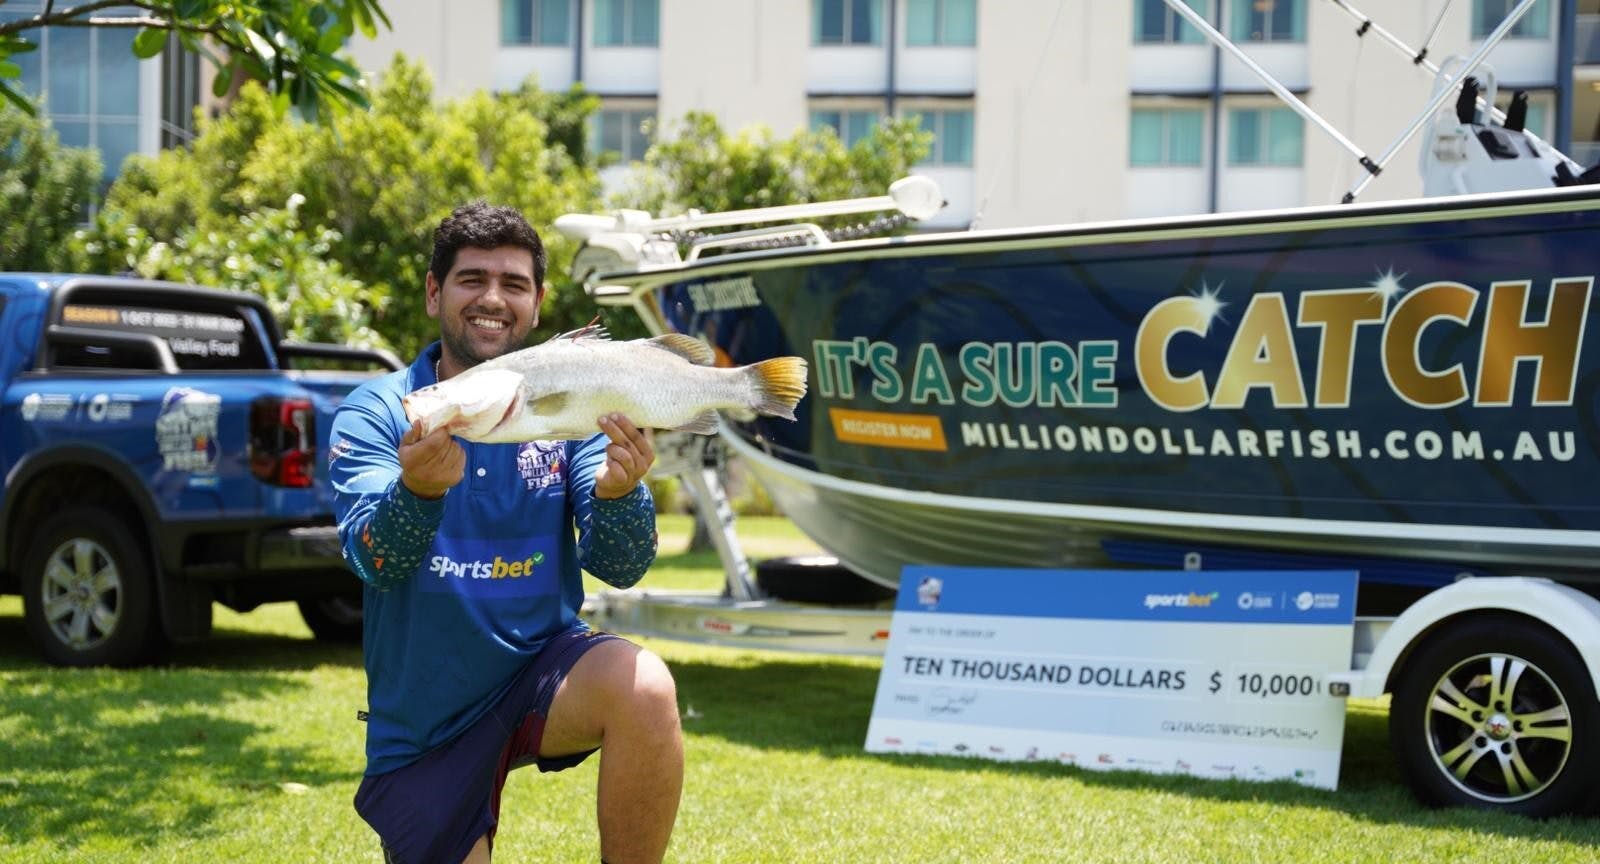 Zain Lopez has caught the fist Million Dollar Fish of Season 9 a $10,000 barra